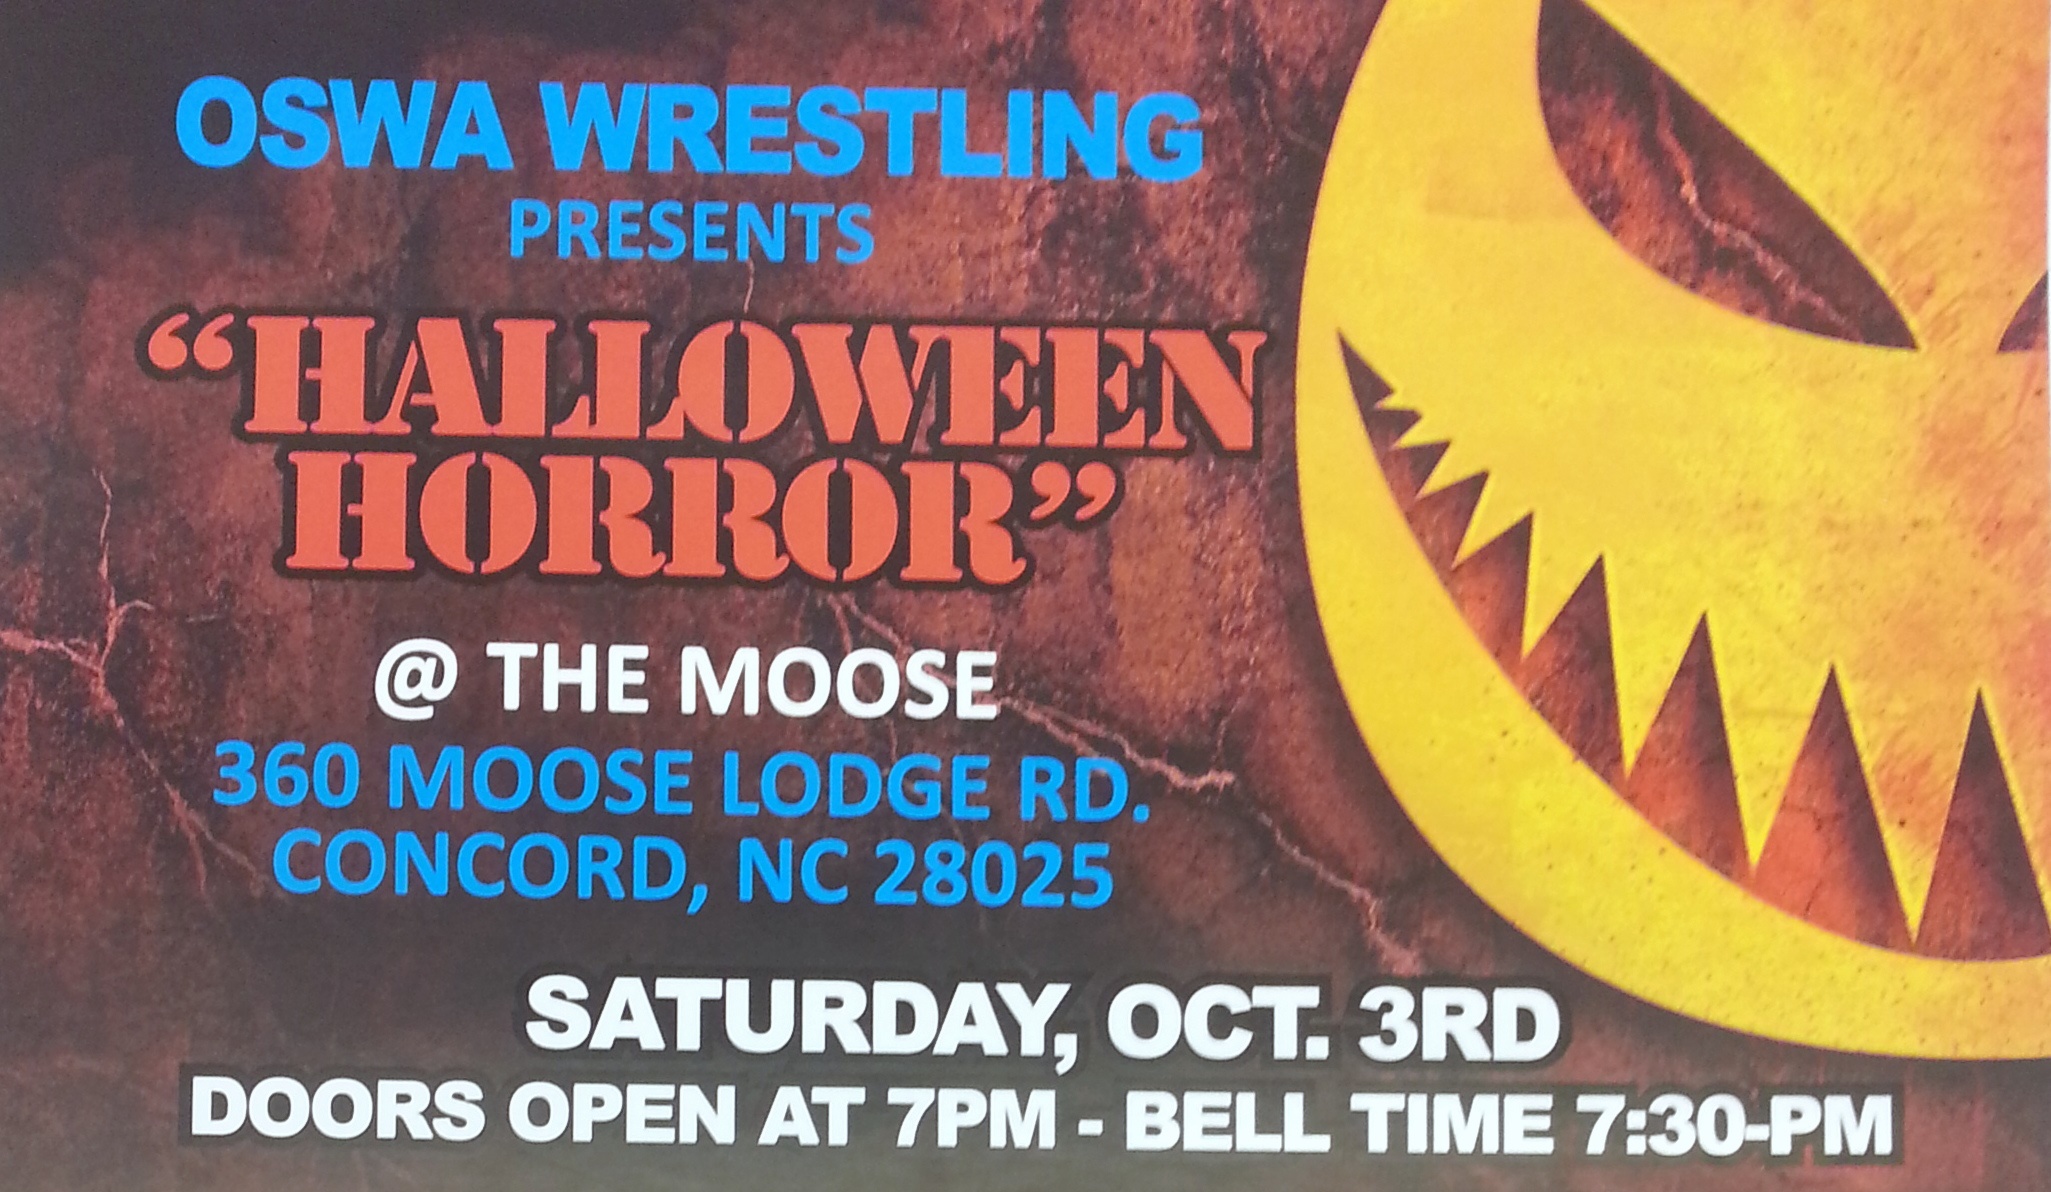 OSWA Wrestling is ready for “Halloween Horror”!